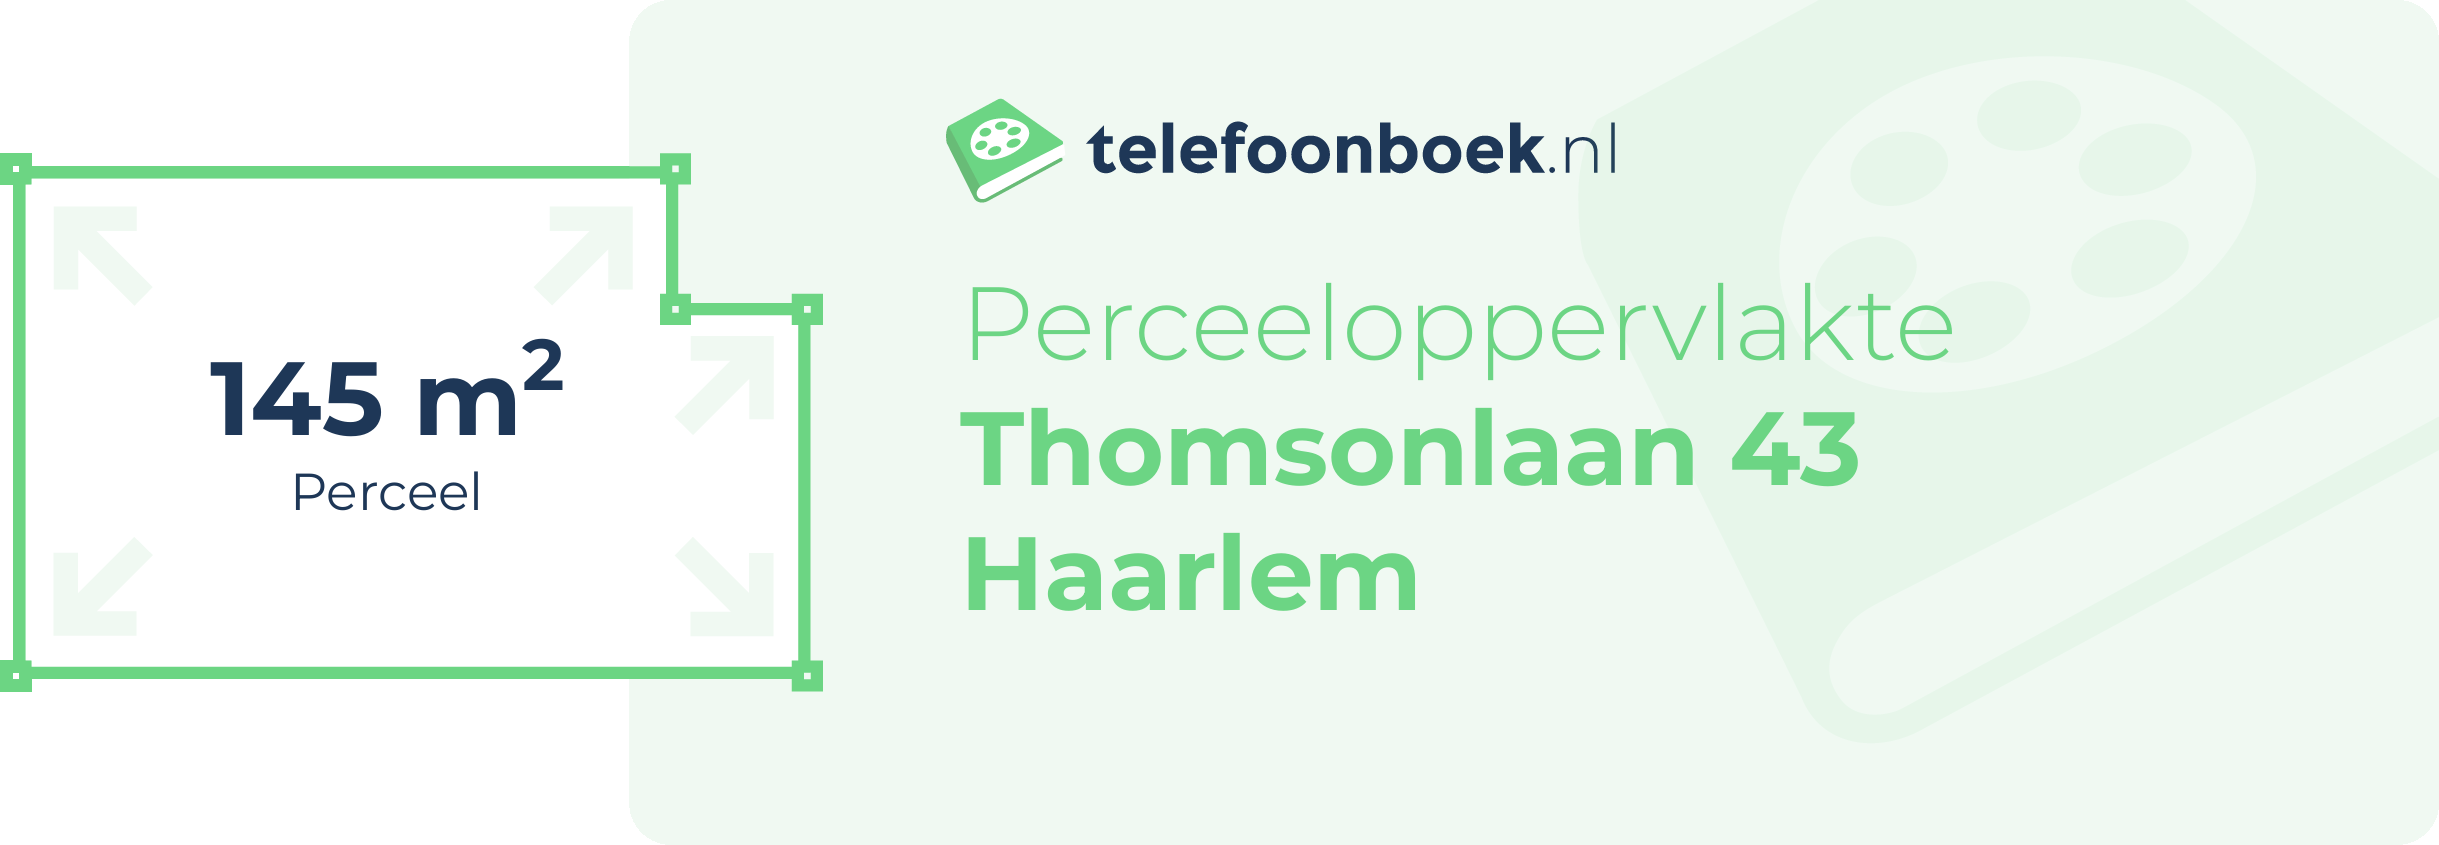 Perceeloppervlakte Thomsonlaan 43 Haarlem